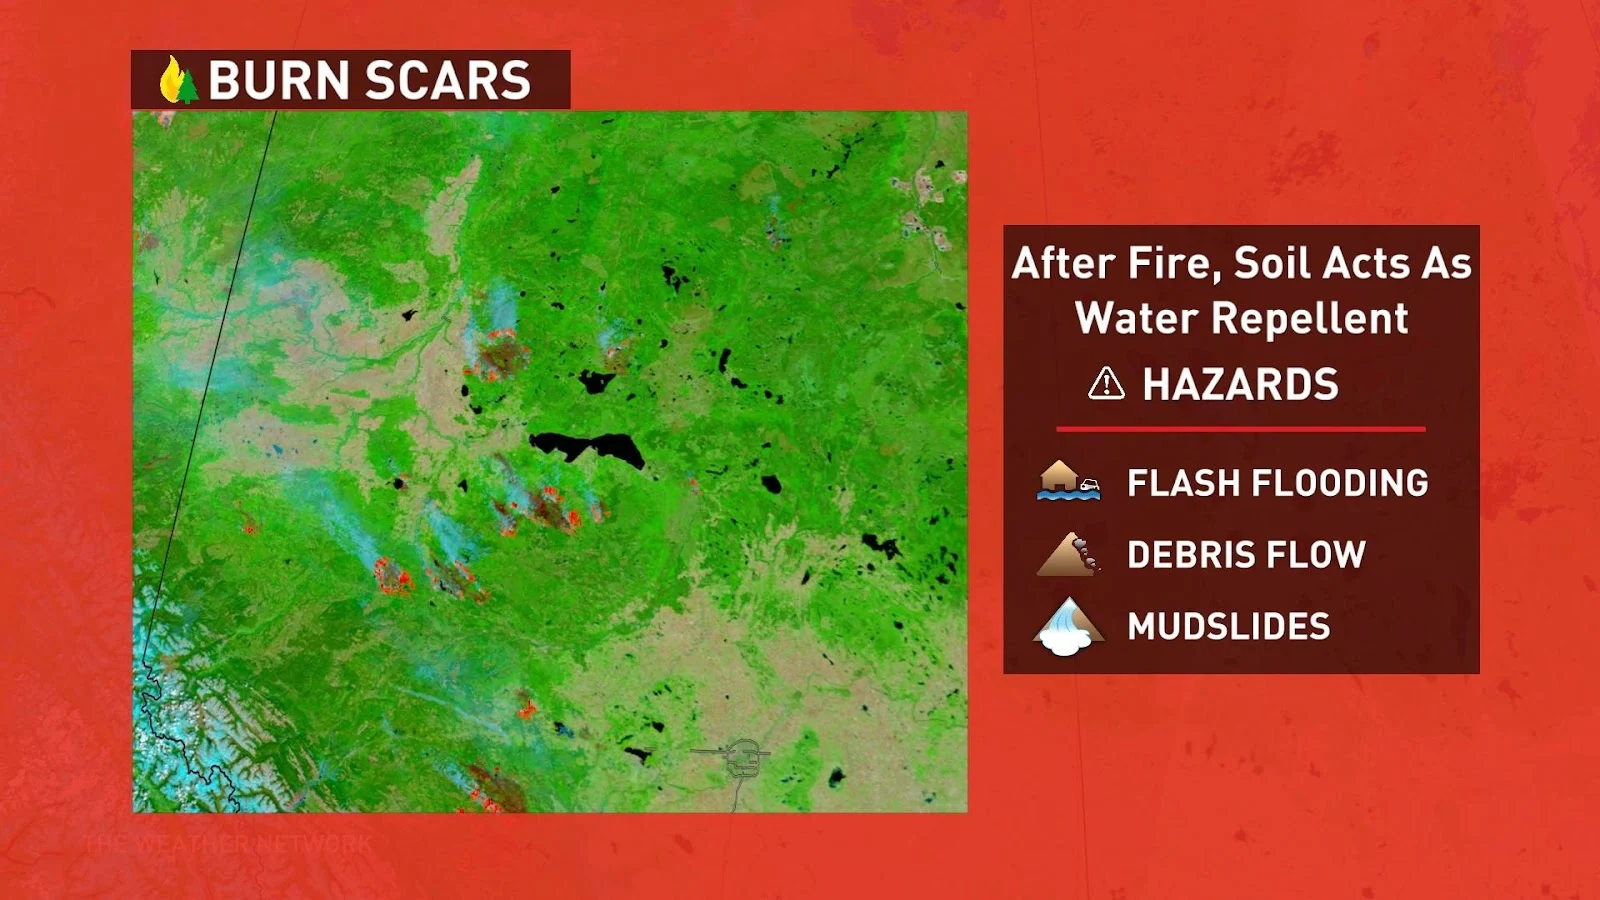 Flood risk hazards from burn scars